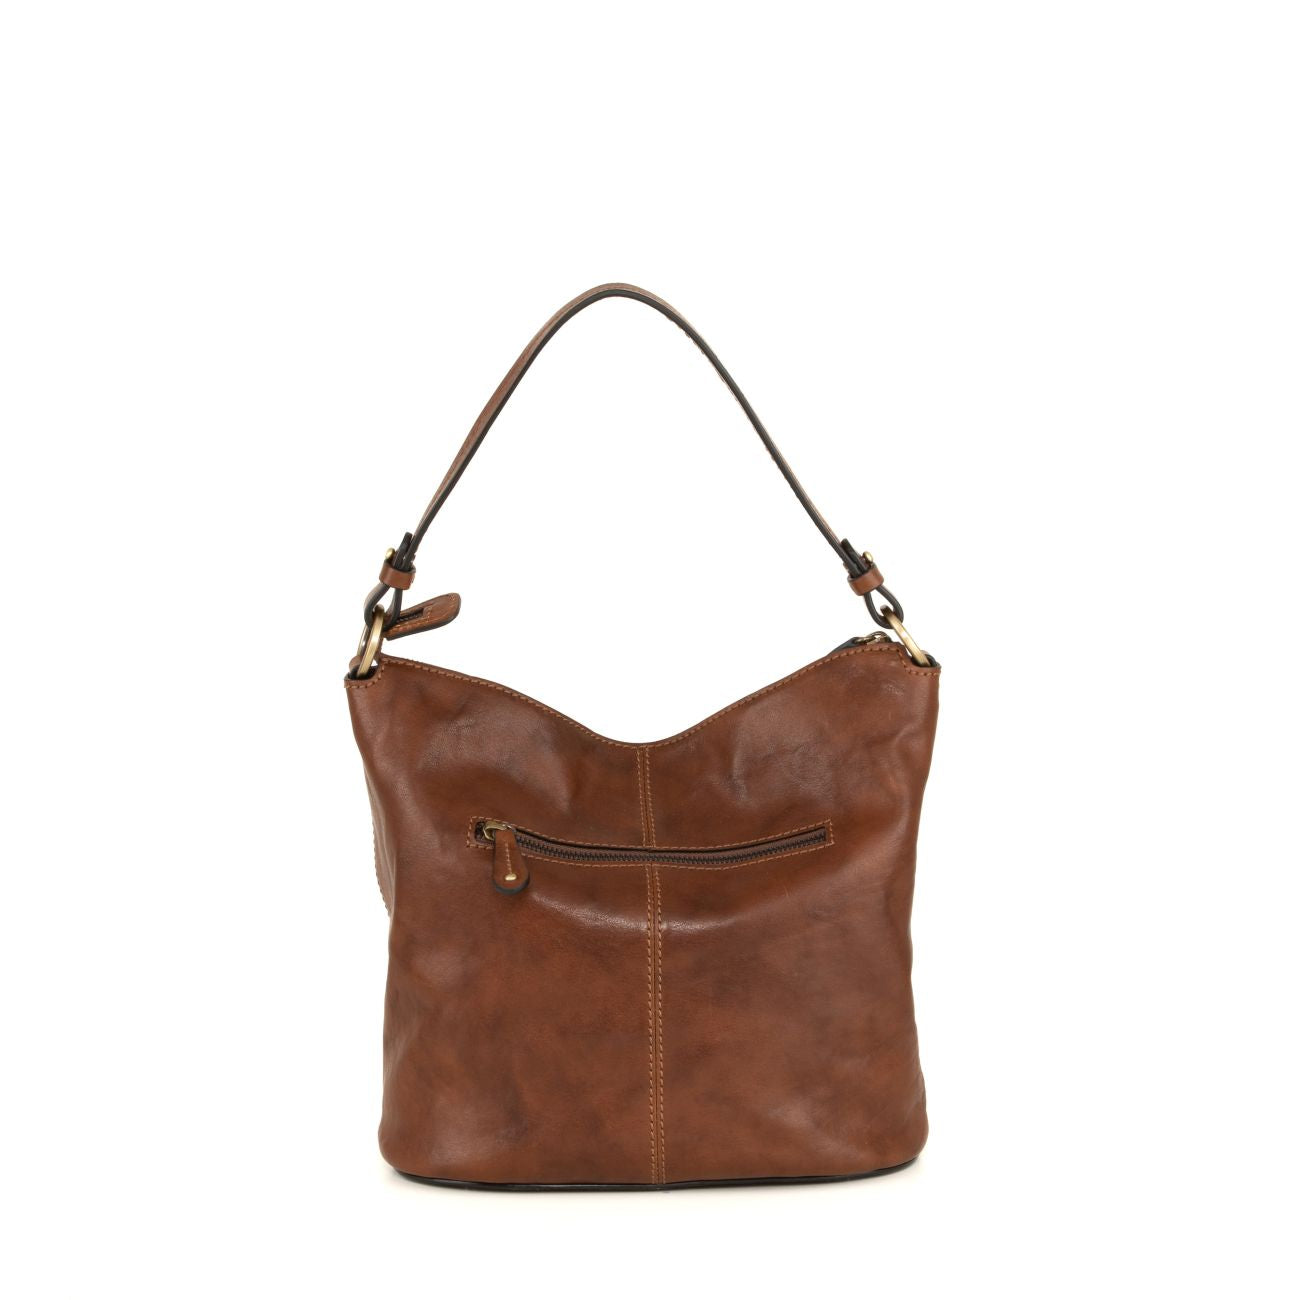 Gianni Conti Samantha Brown Leather Shoulder Bag